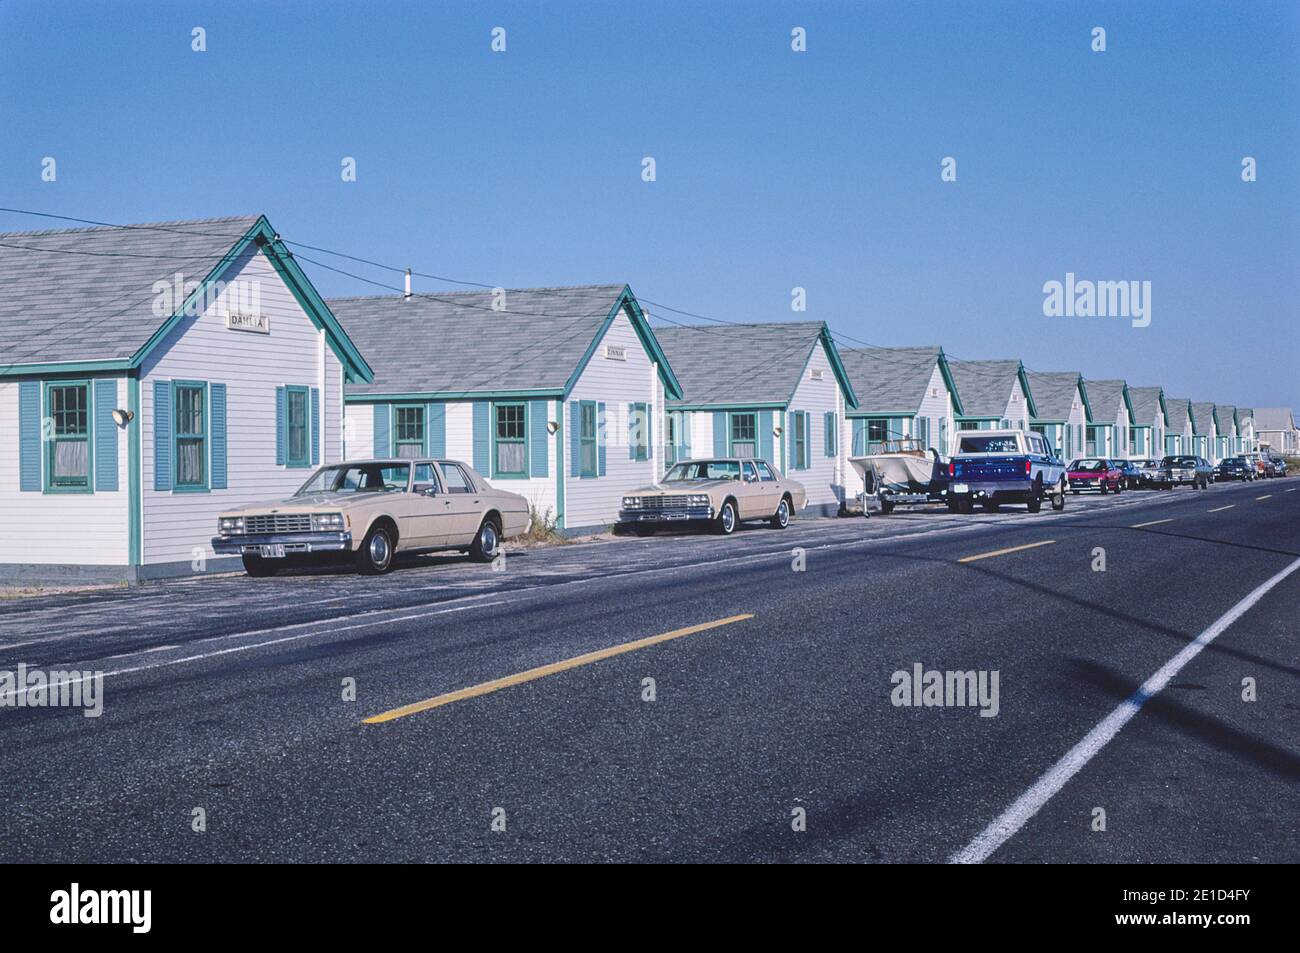 Day's Cottages, North Truro, Massachusetts, USA, John Margolies Roadside America Photograph Archive, 1984 Stock Photo